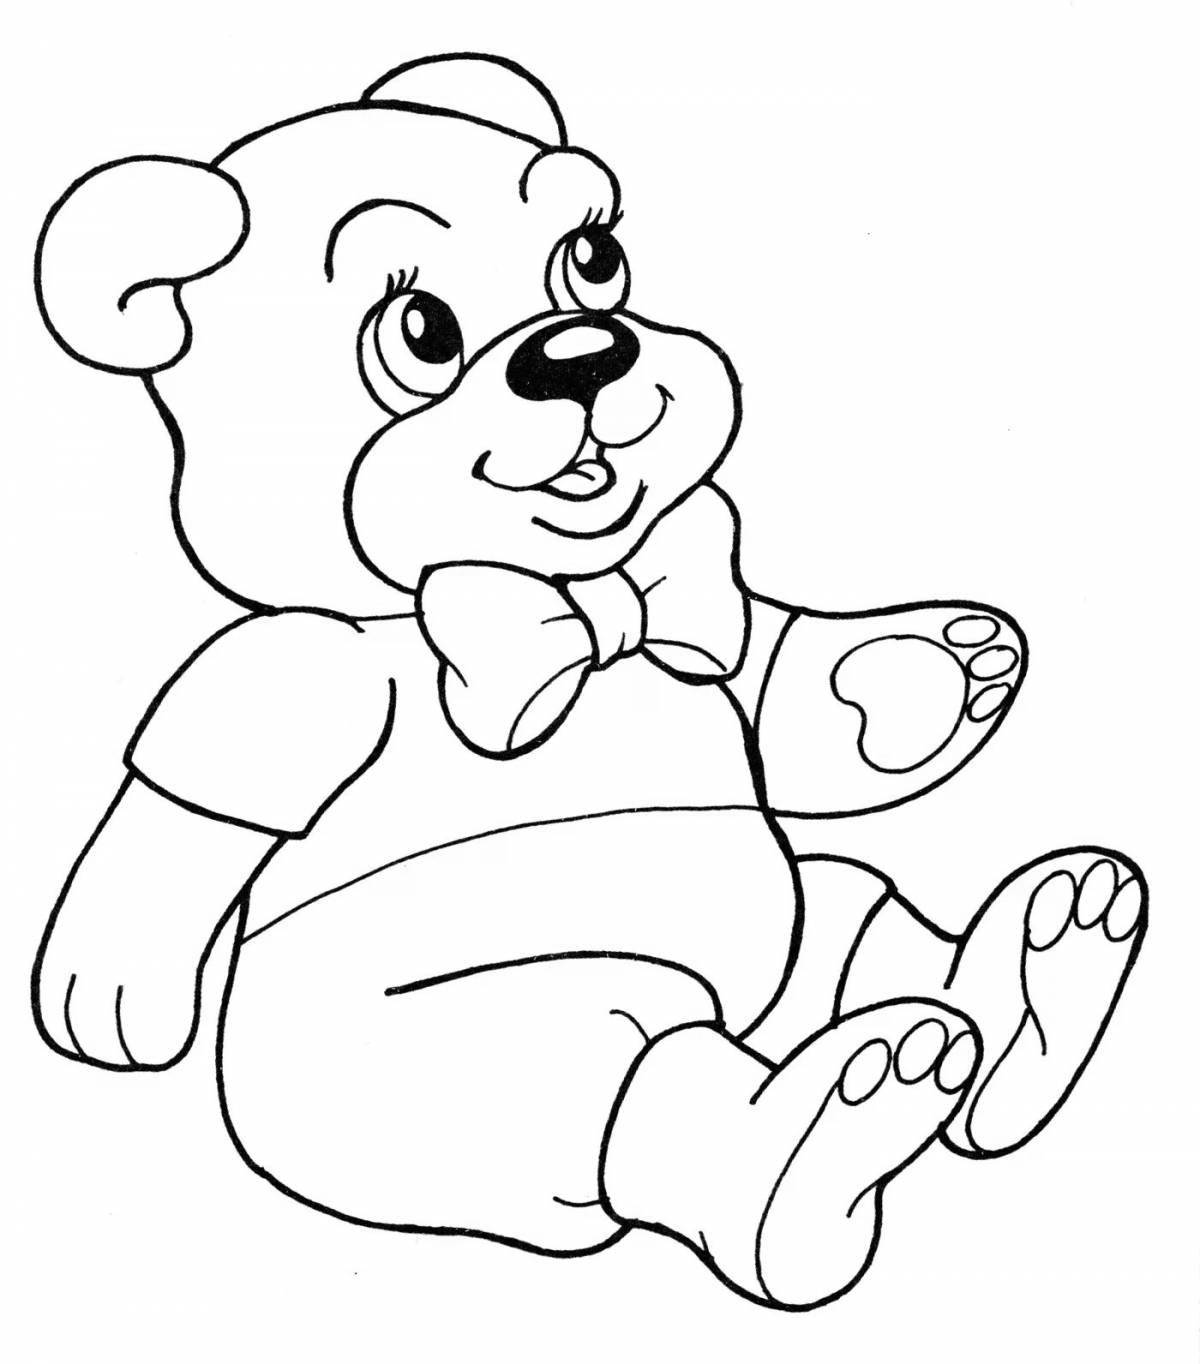 Soft teddy bear coloring book